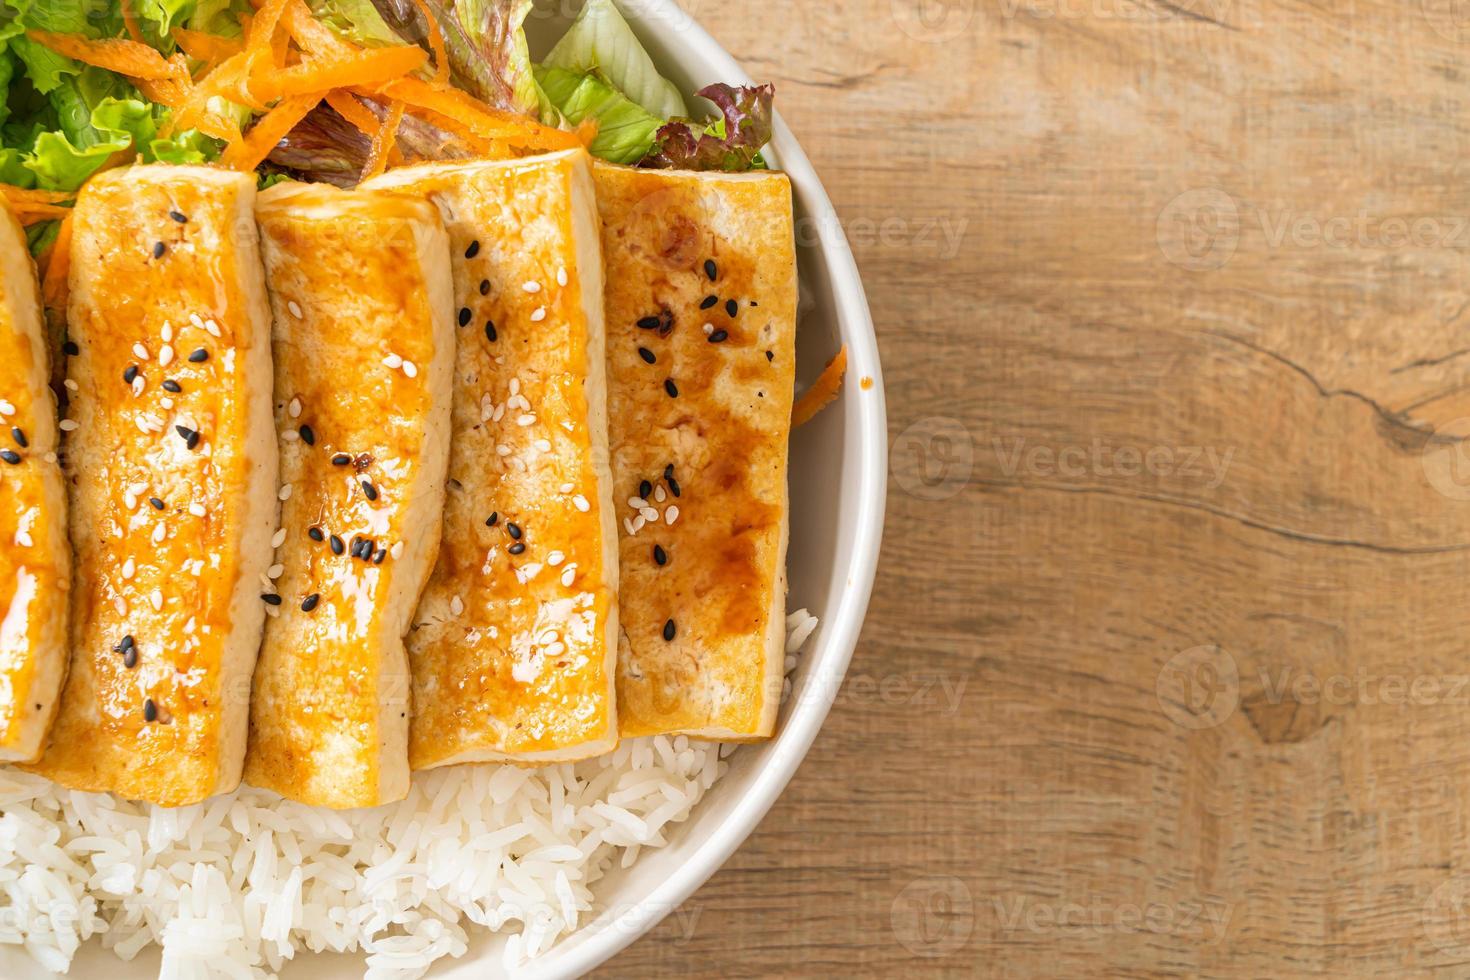 teriyaki tofu rijstkom - veganistische eetstijl foto